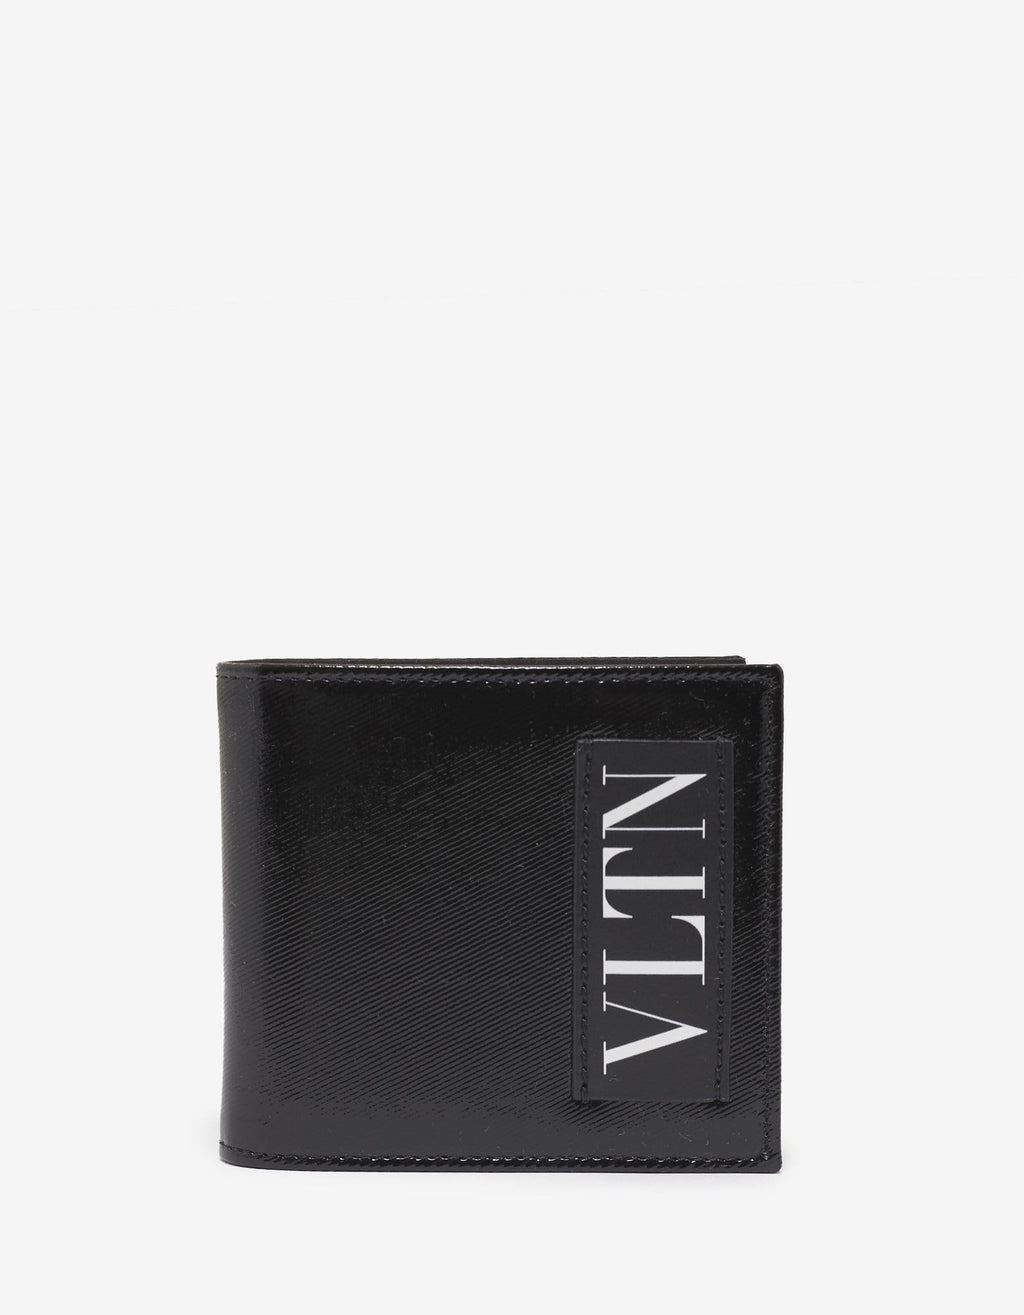 Valentino Garavani Valentino Garavani Black Patent Leather VLTN Billfold Wallet